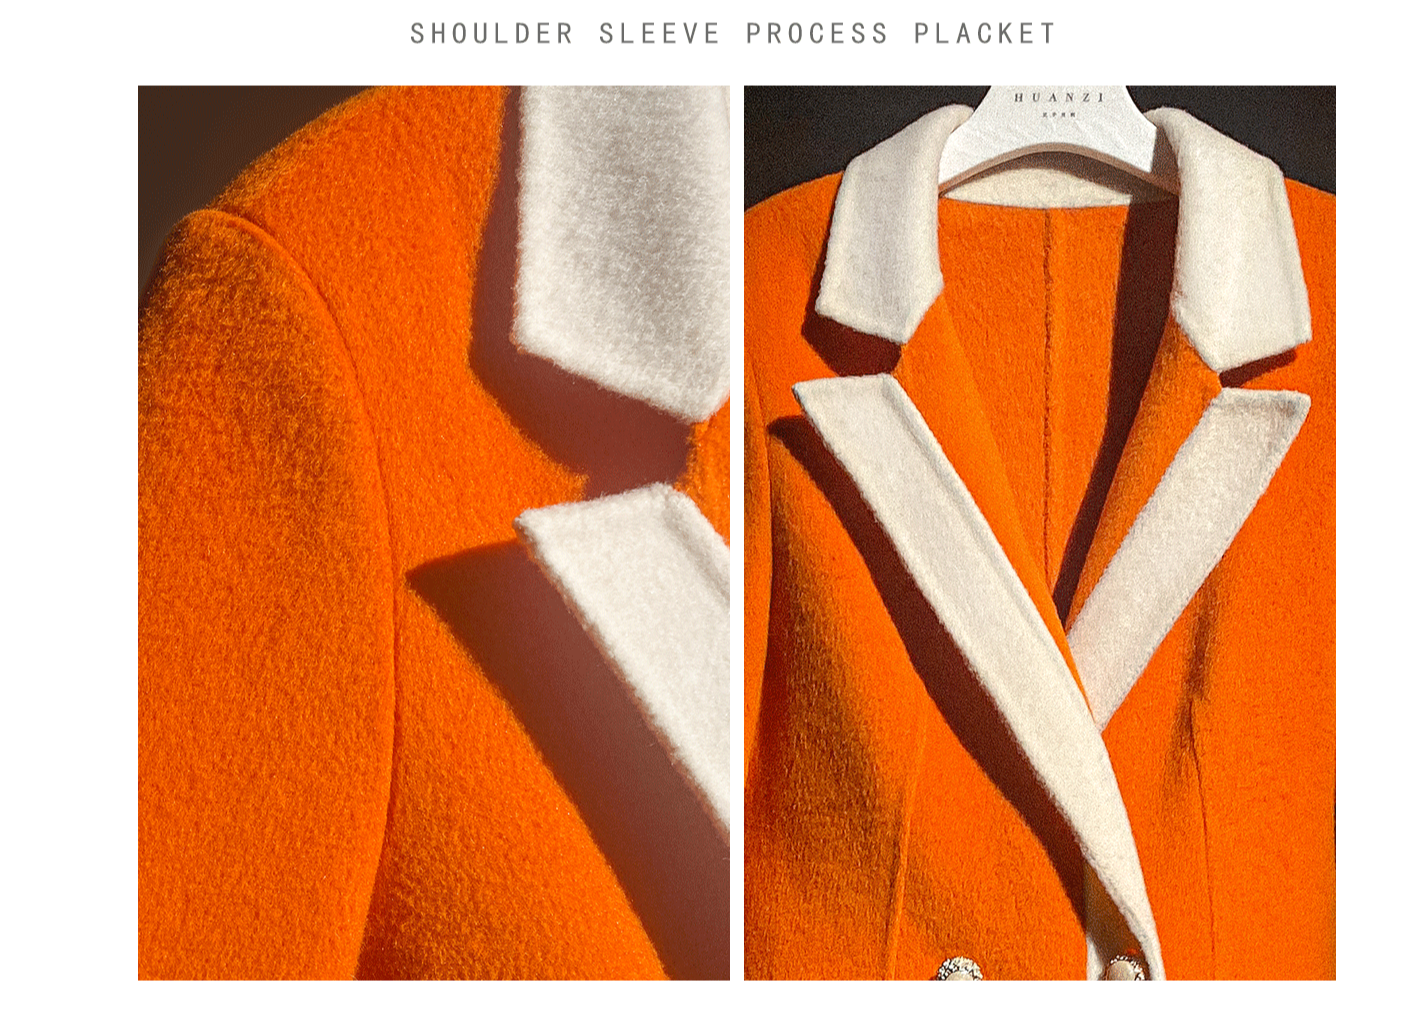 Huanzi high-grade contrasting color double-sided cashmere woolen coat new autumn and winter waist waist long- Trina